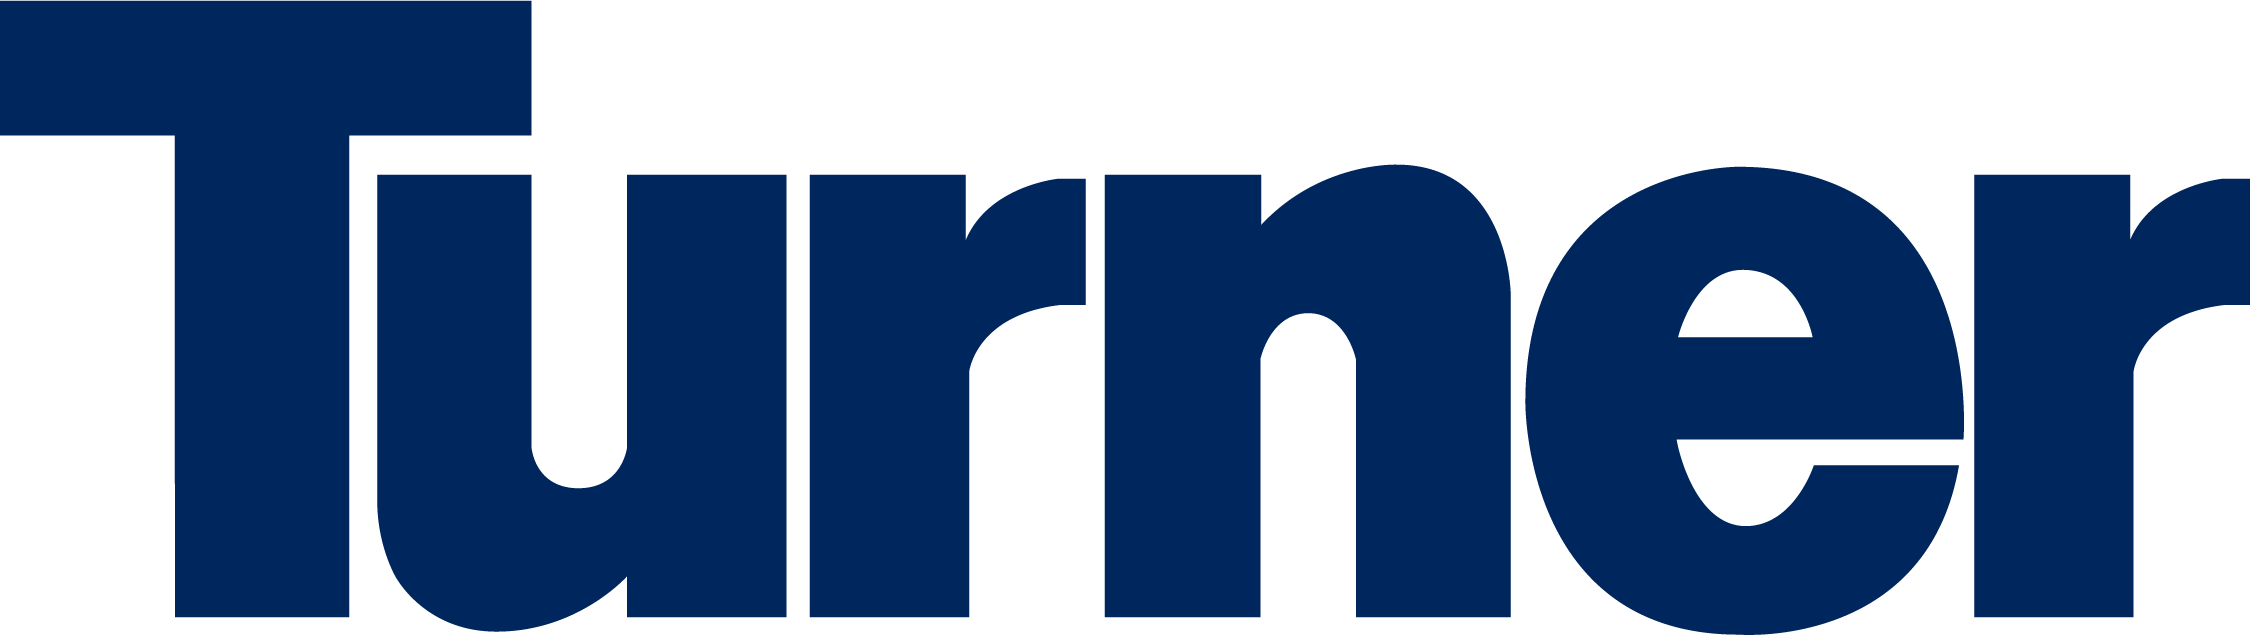 Turner logo - the letters Turner in dark blue